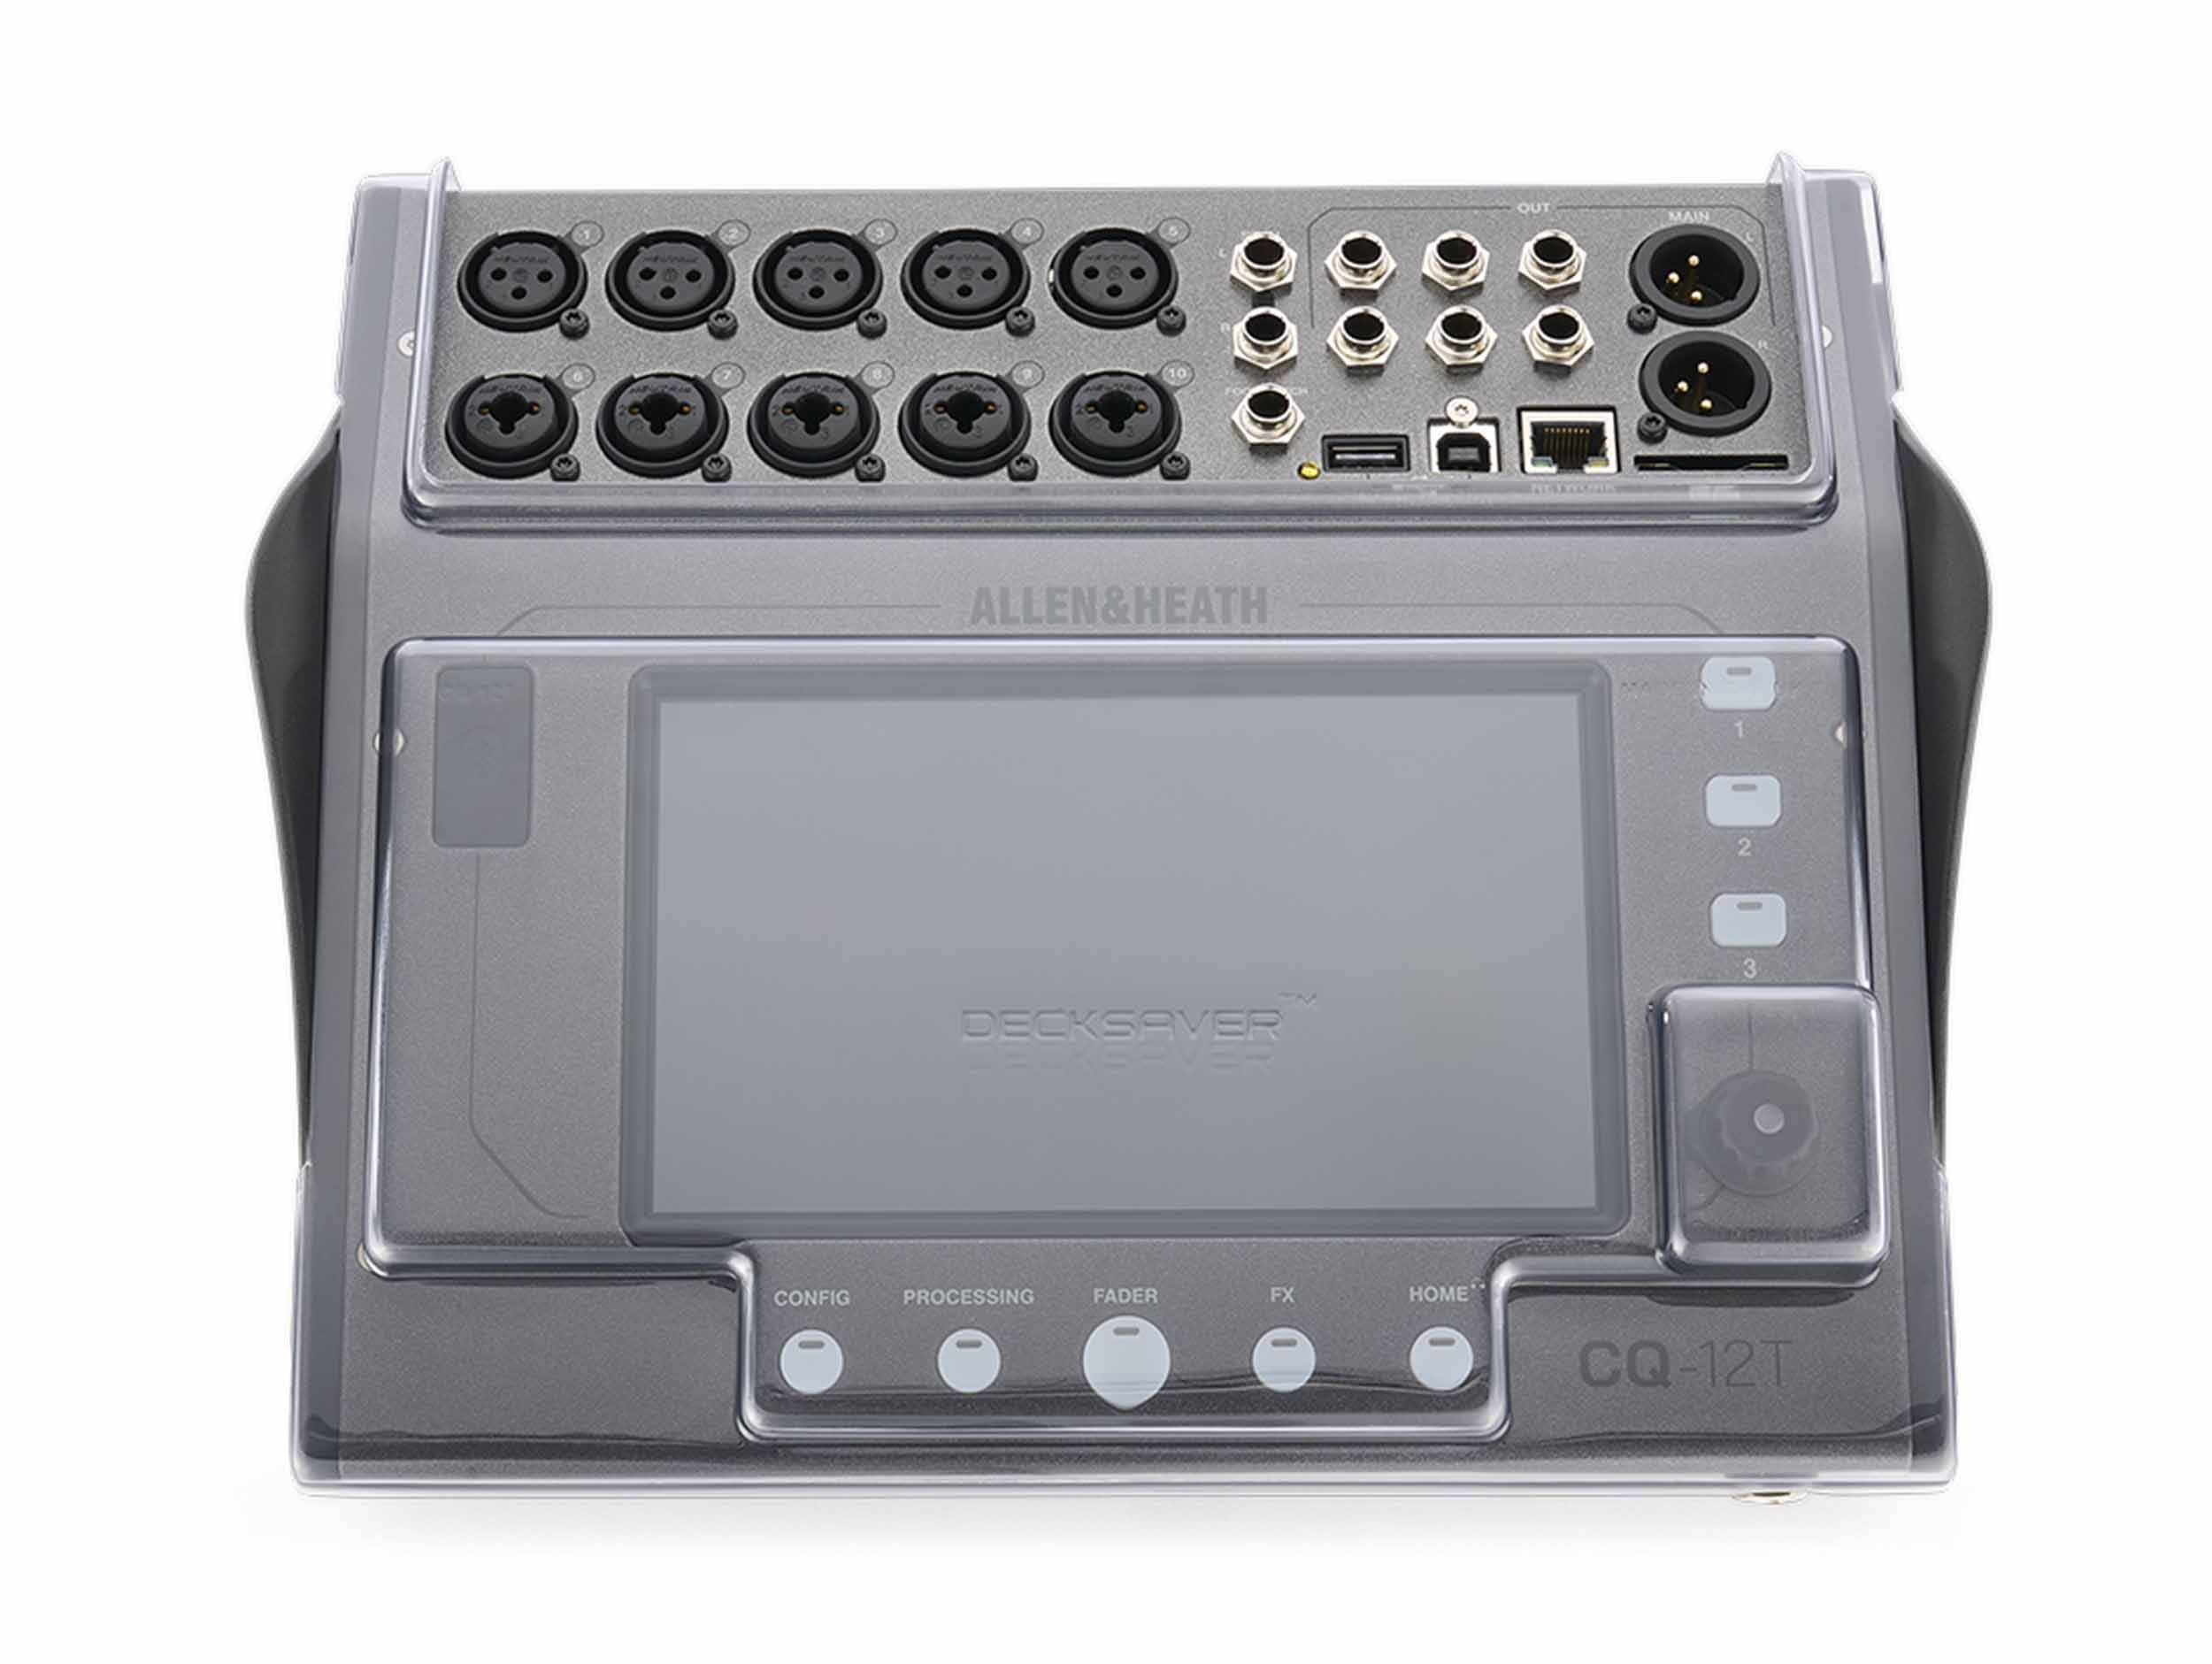 Decksaver DS-PC-CQ12T, Protection Cover for Allen & Heath CQ-12T Digital Mixer by Decksaver